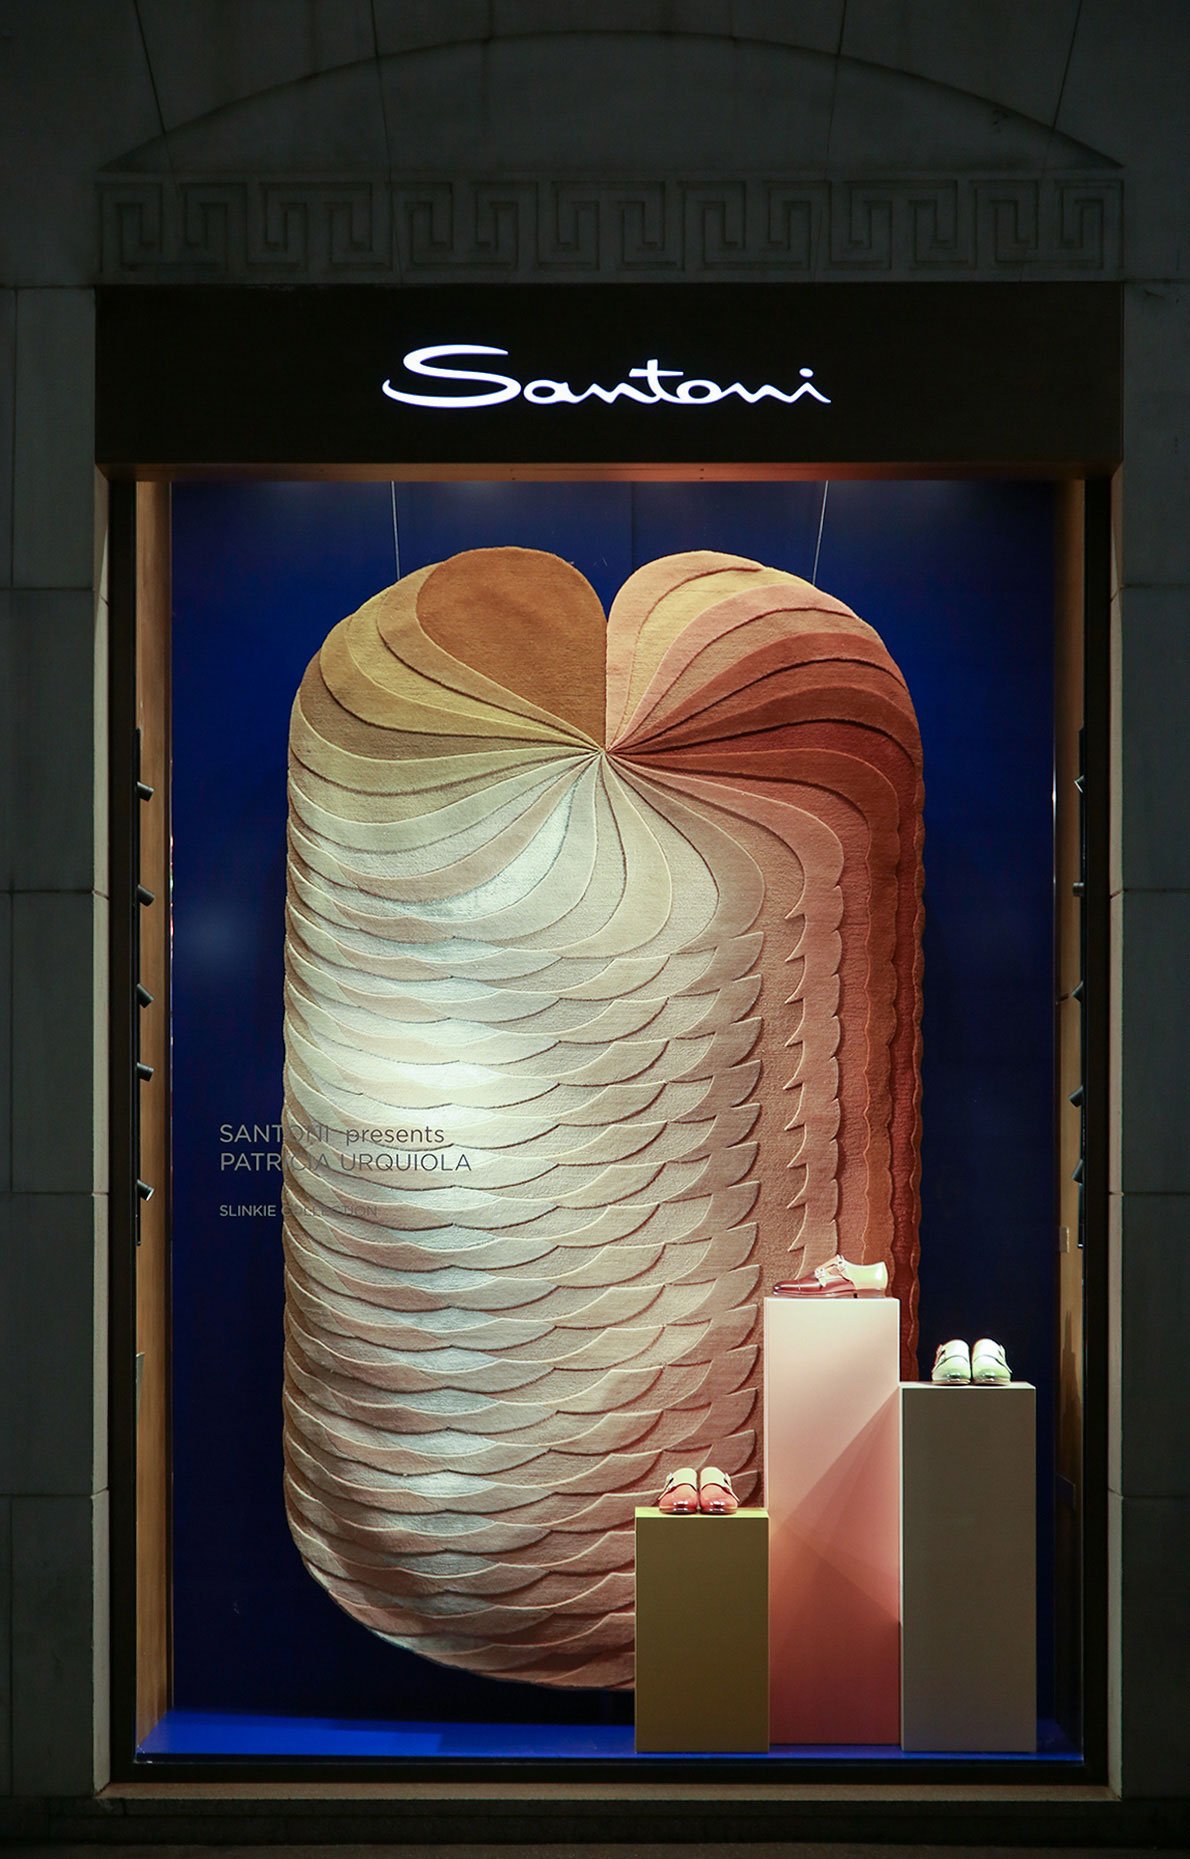 Patricia Urquiola 为 cc-tapis 设计的 Slinkie 地毯新系列在 Santoni 精品店的橱窗中展出，限量版双和尚鞋与地毯以相同的调色板生产。